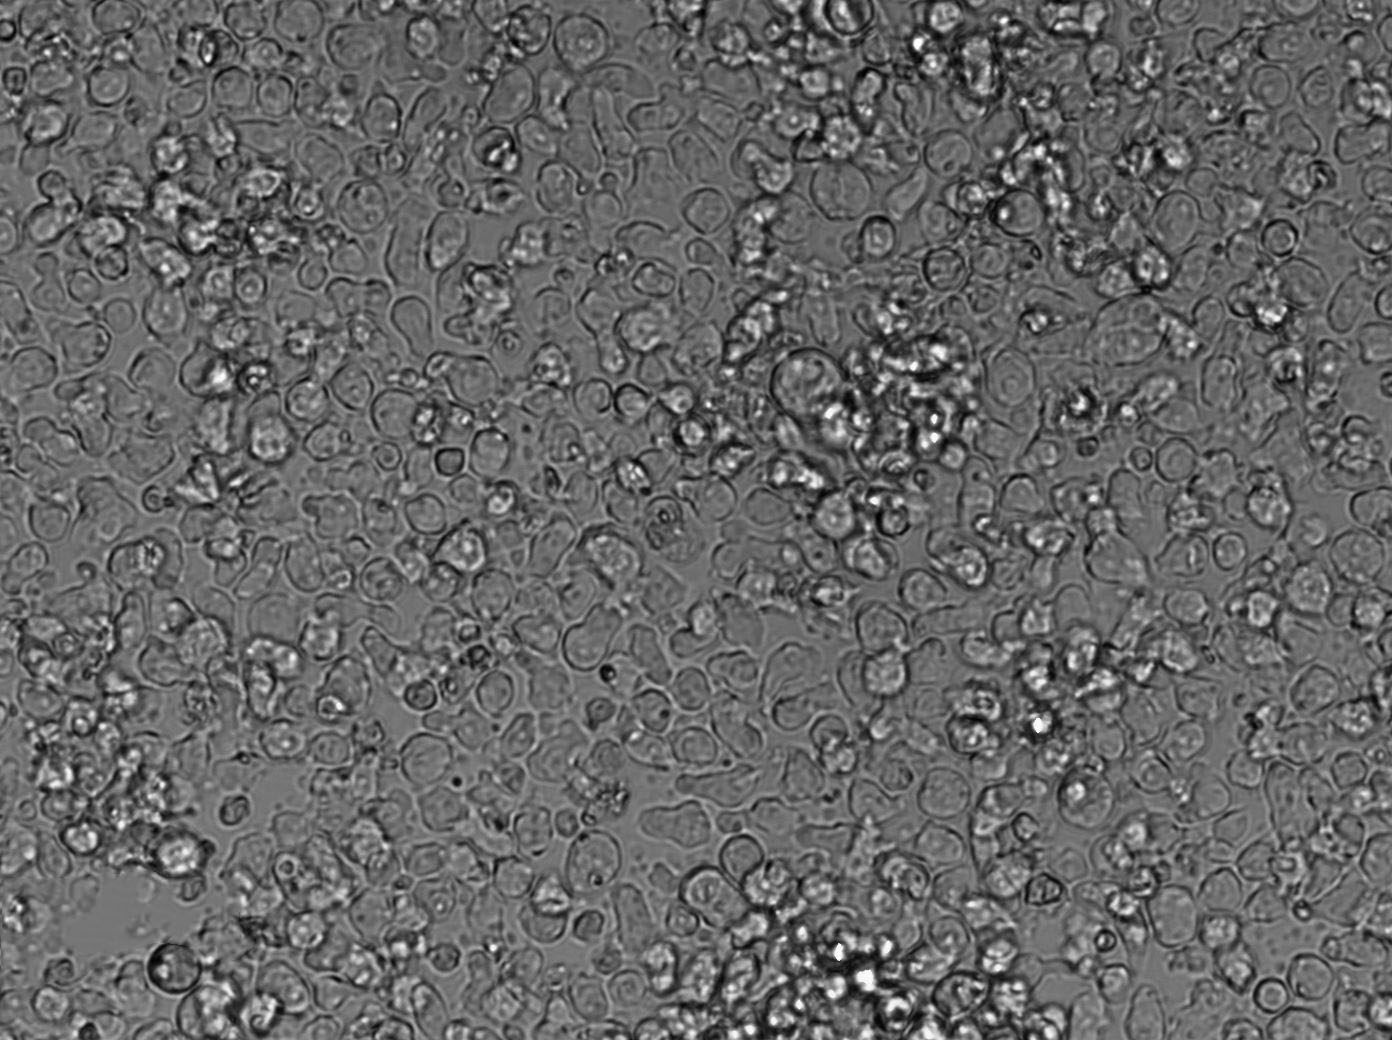 Karpas-299 Cell|人间变性大细胞淋巴瘤细胞,Karpas-299 Cell